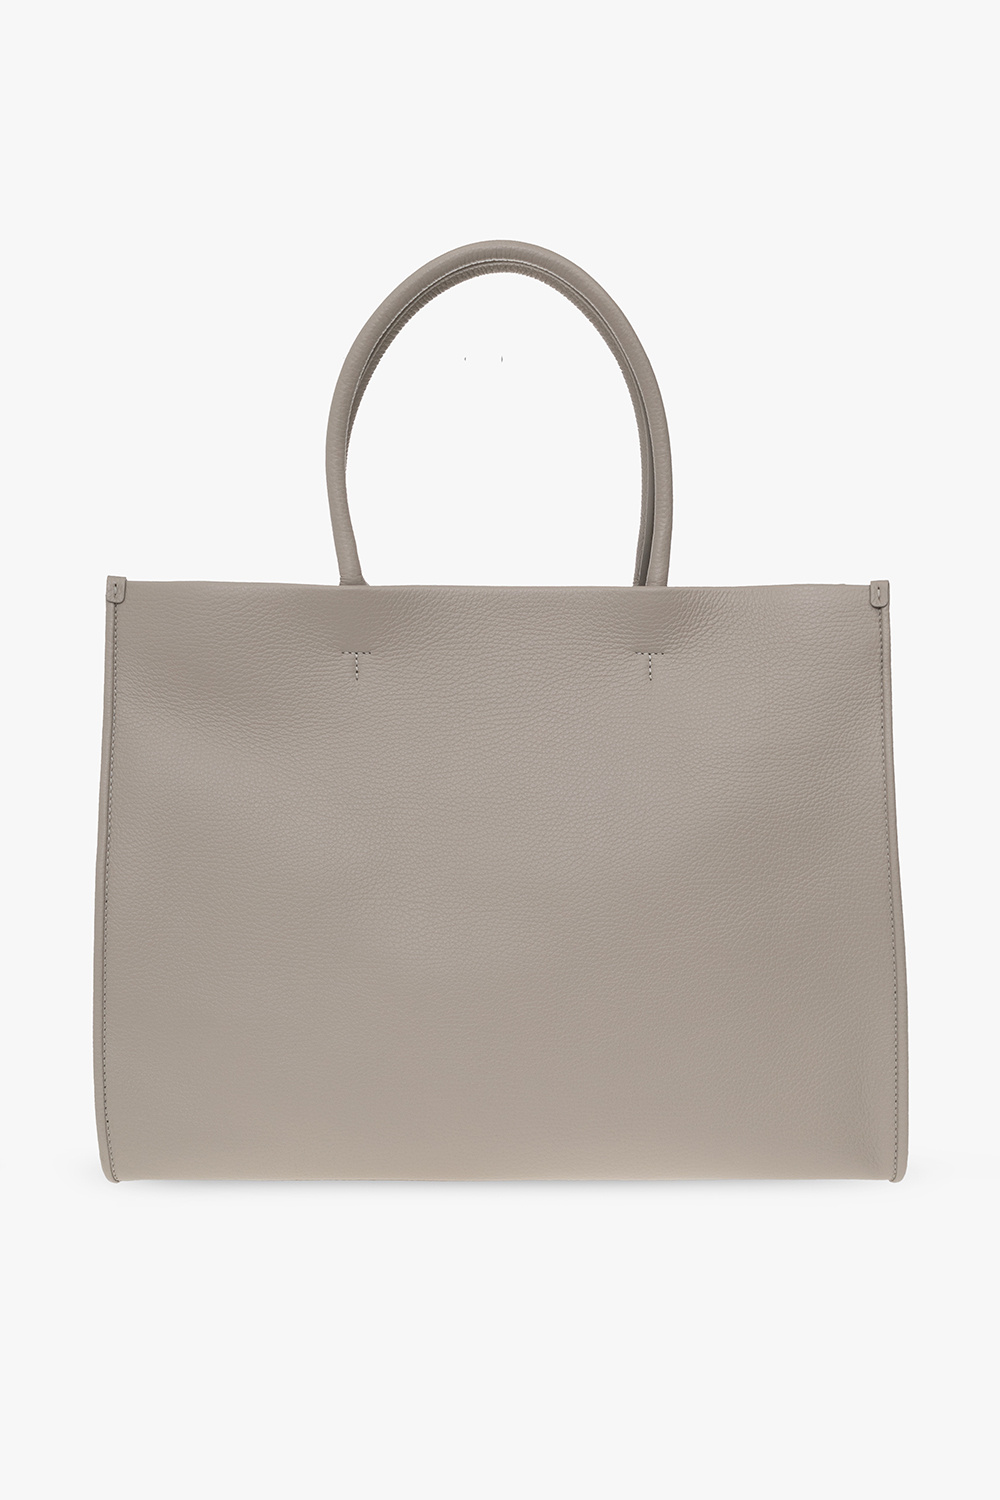 Furla ‘Wonderfurla Large’ shopper Marrone bag